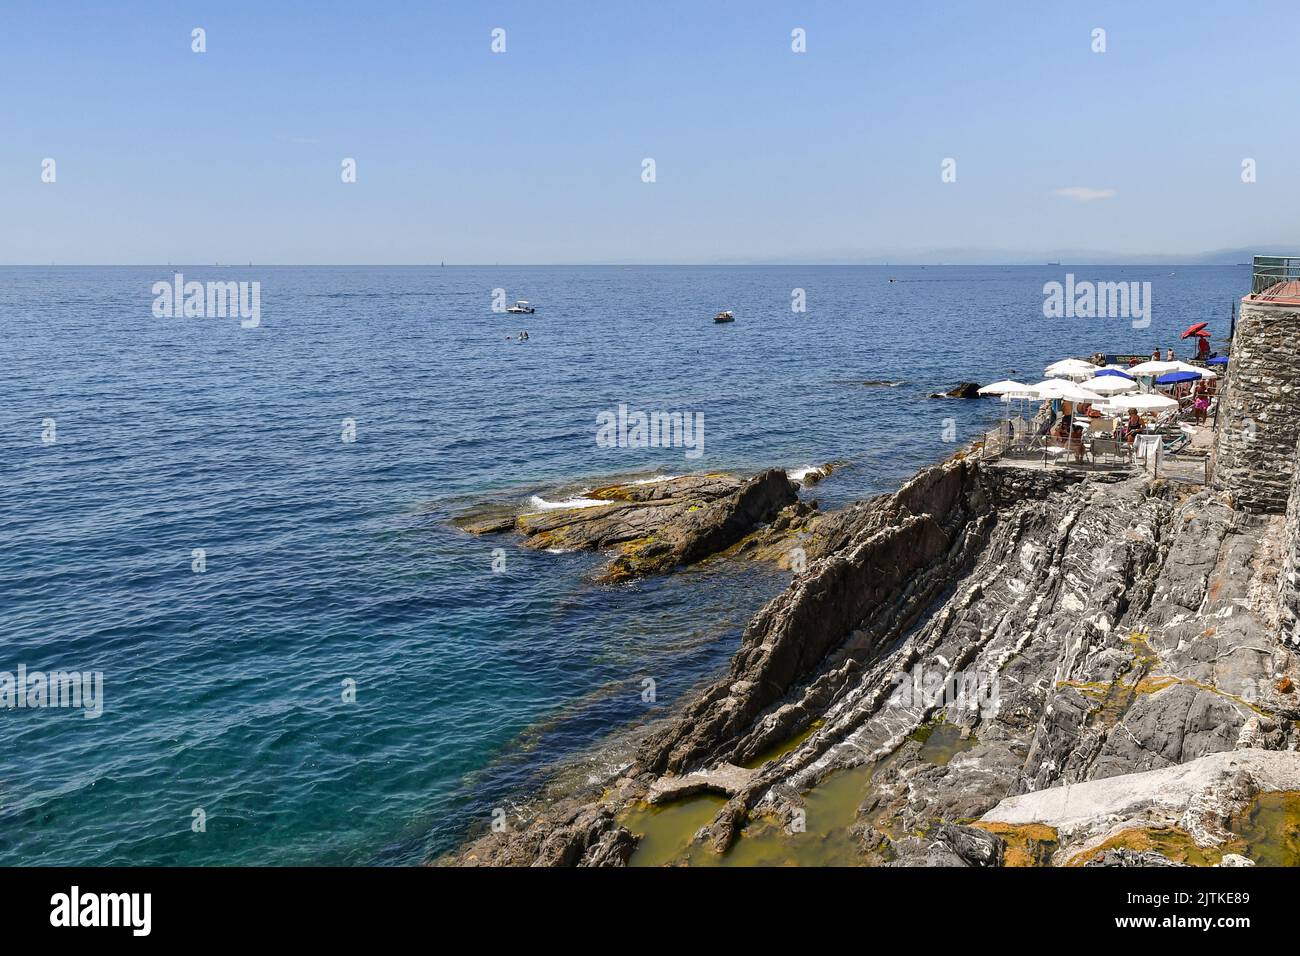 A bathing establishment on the cliff of the Anita Garibaldi Promenade in summer, Nervi, Genoa, Liguria, Italy Stock Photo